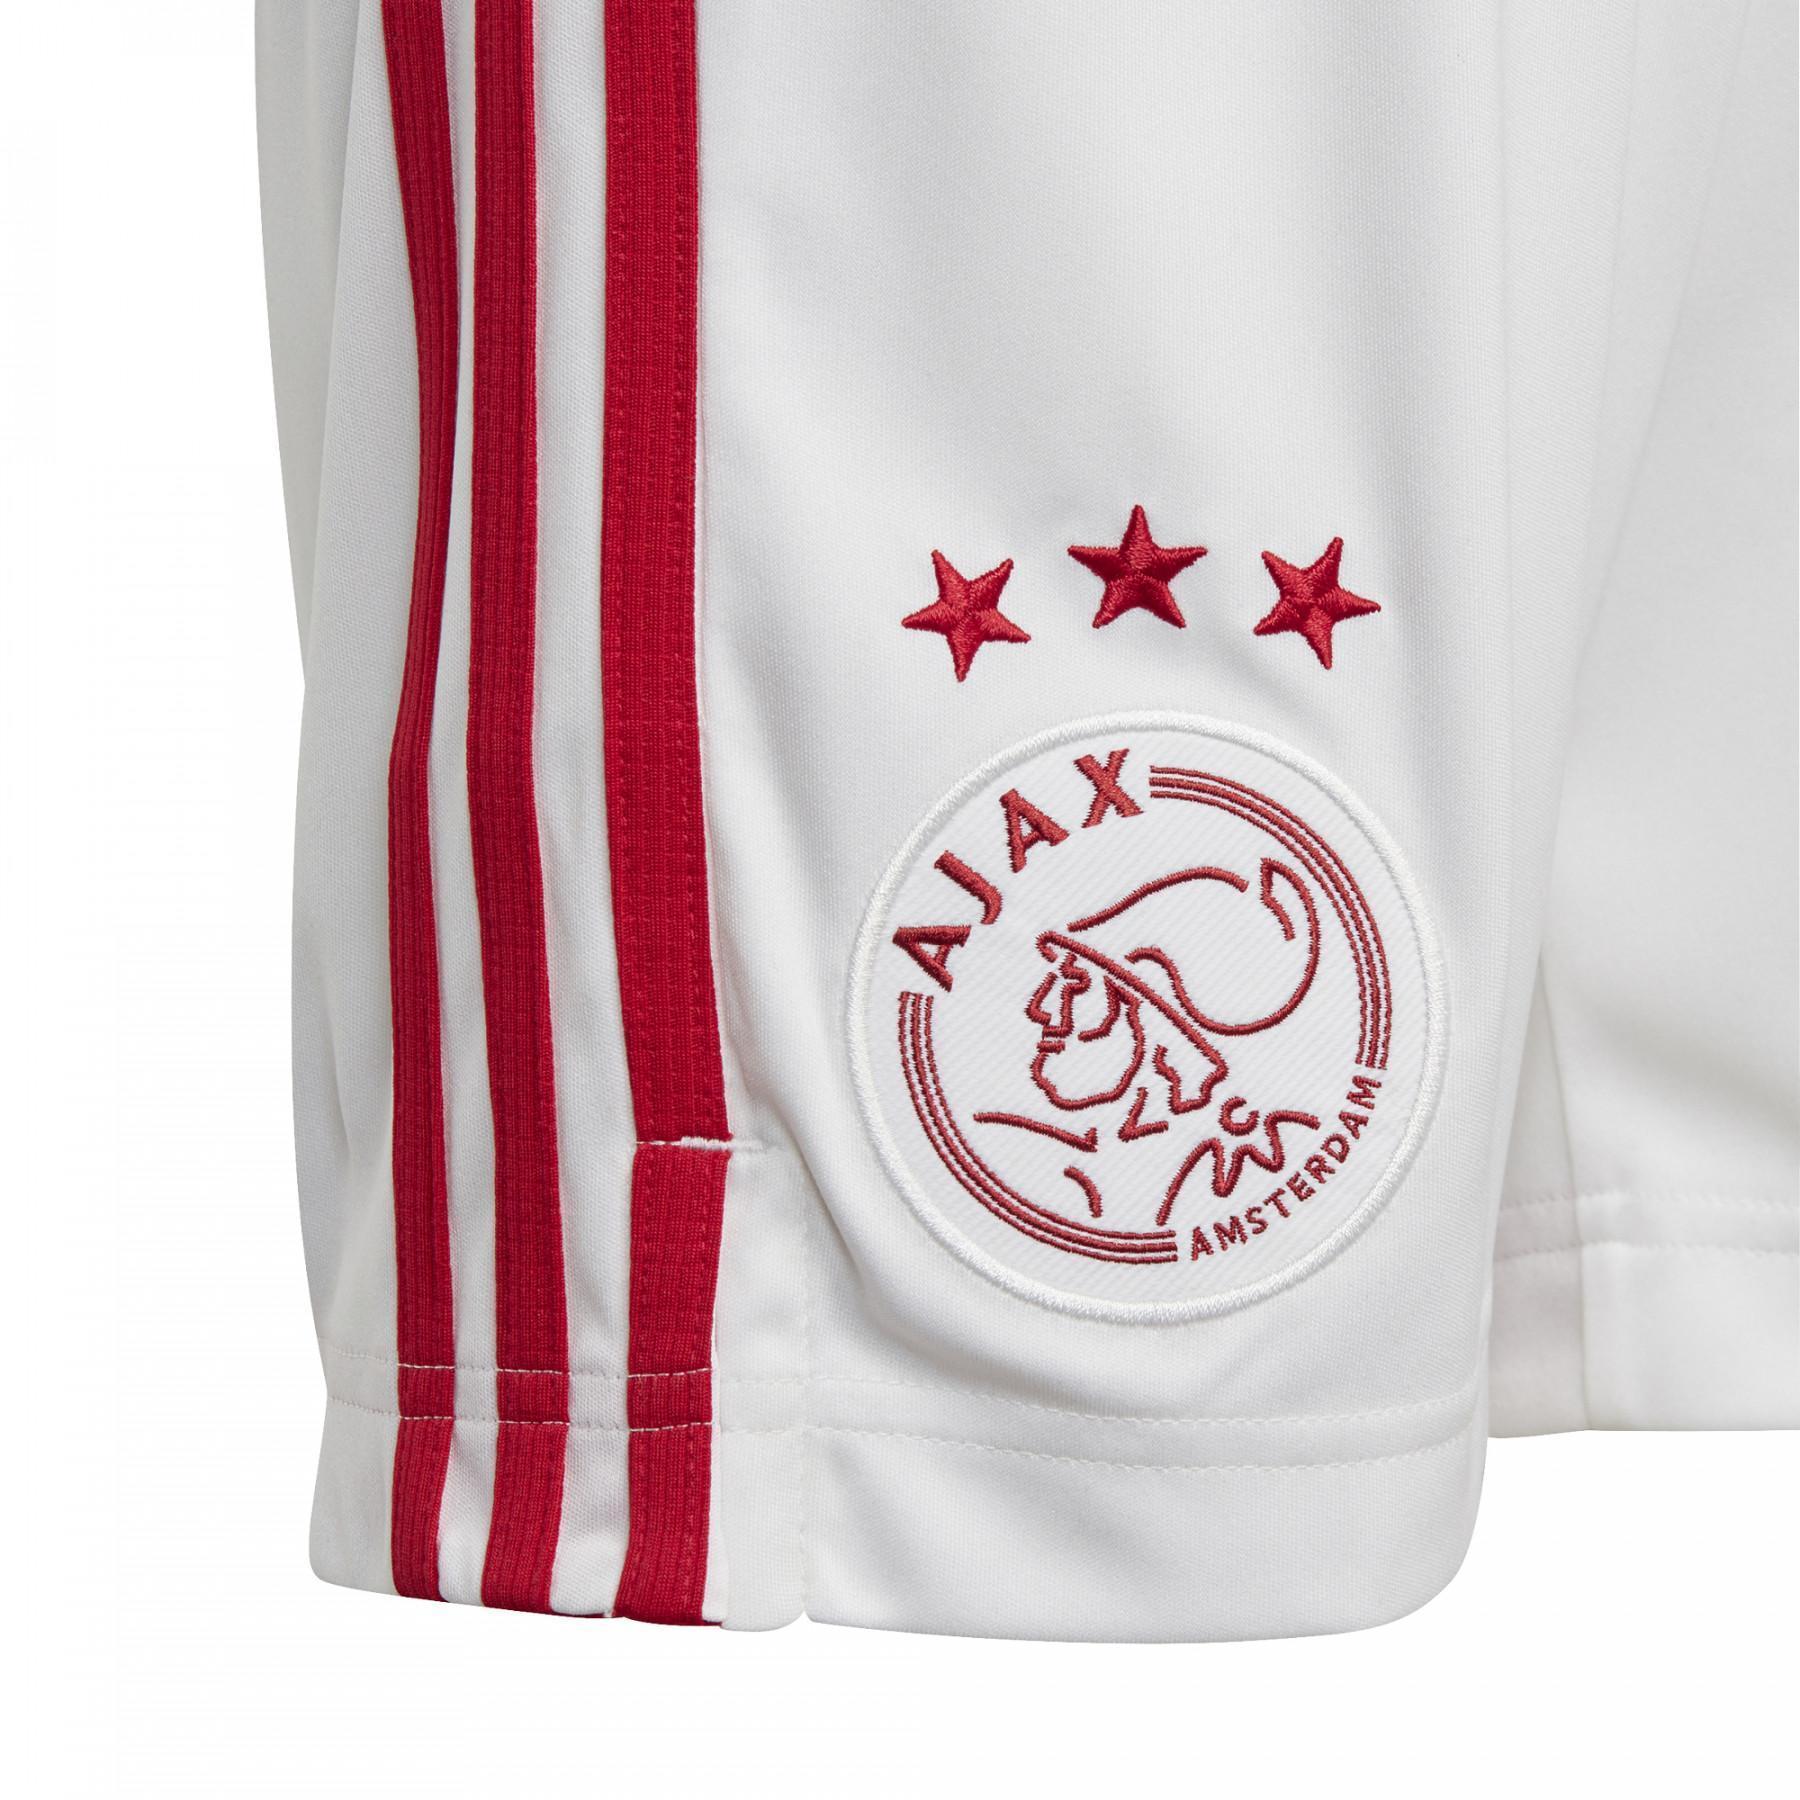 Kurzes Heimkind Ajax Amsterdam 2020/21